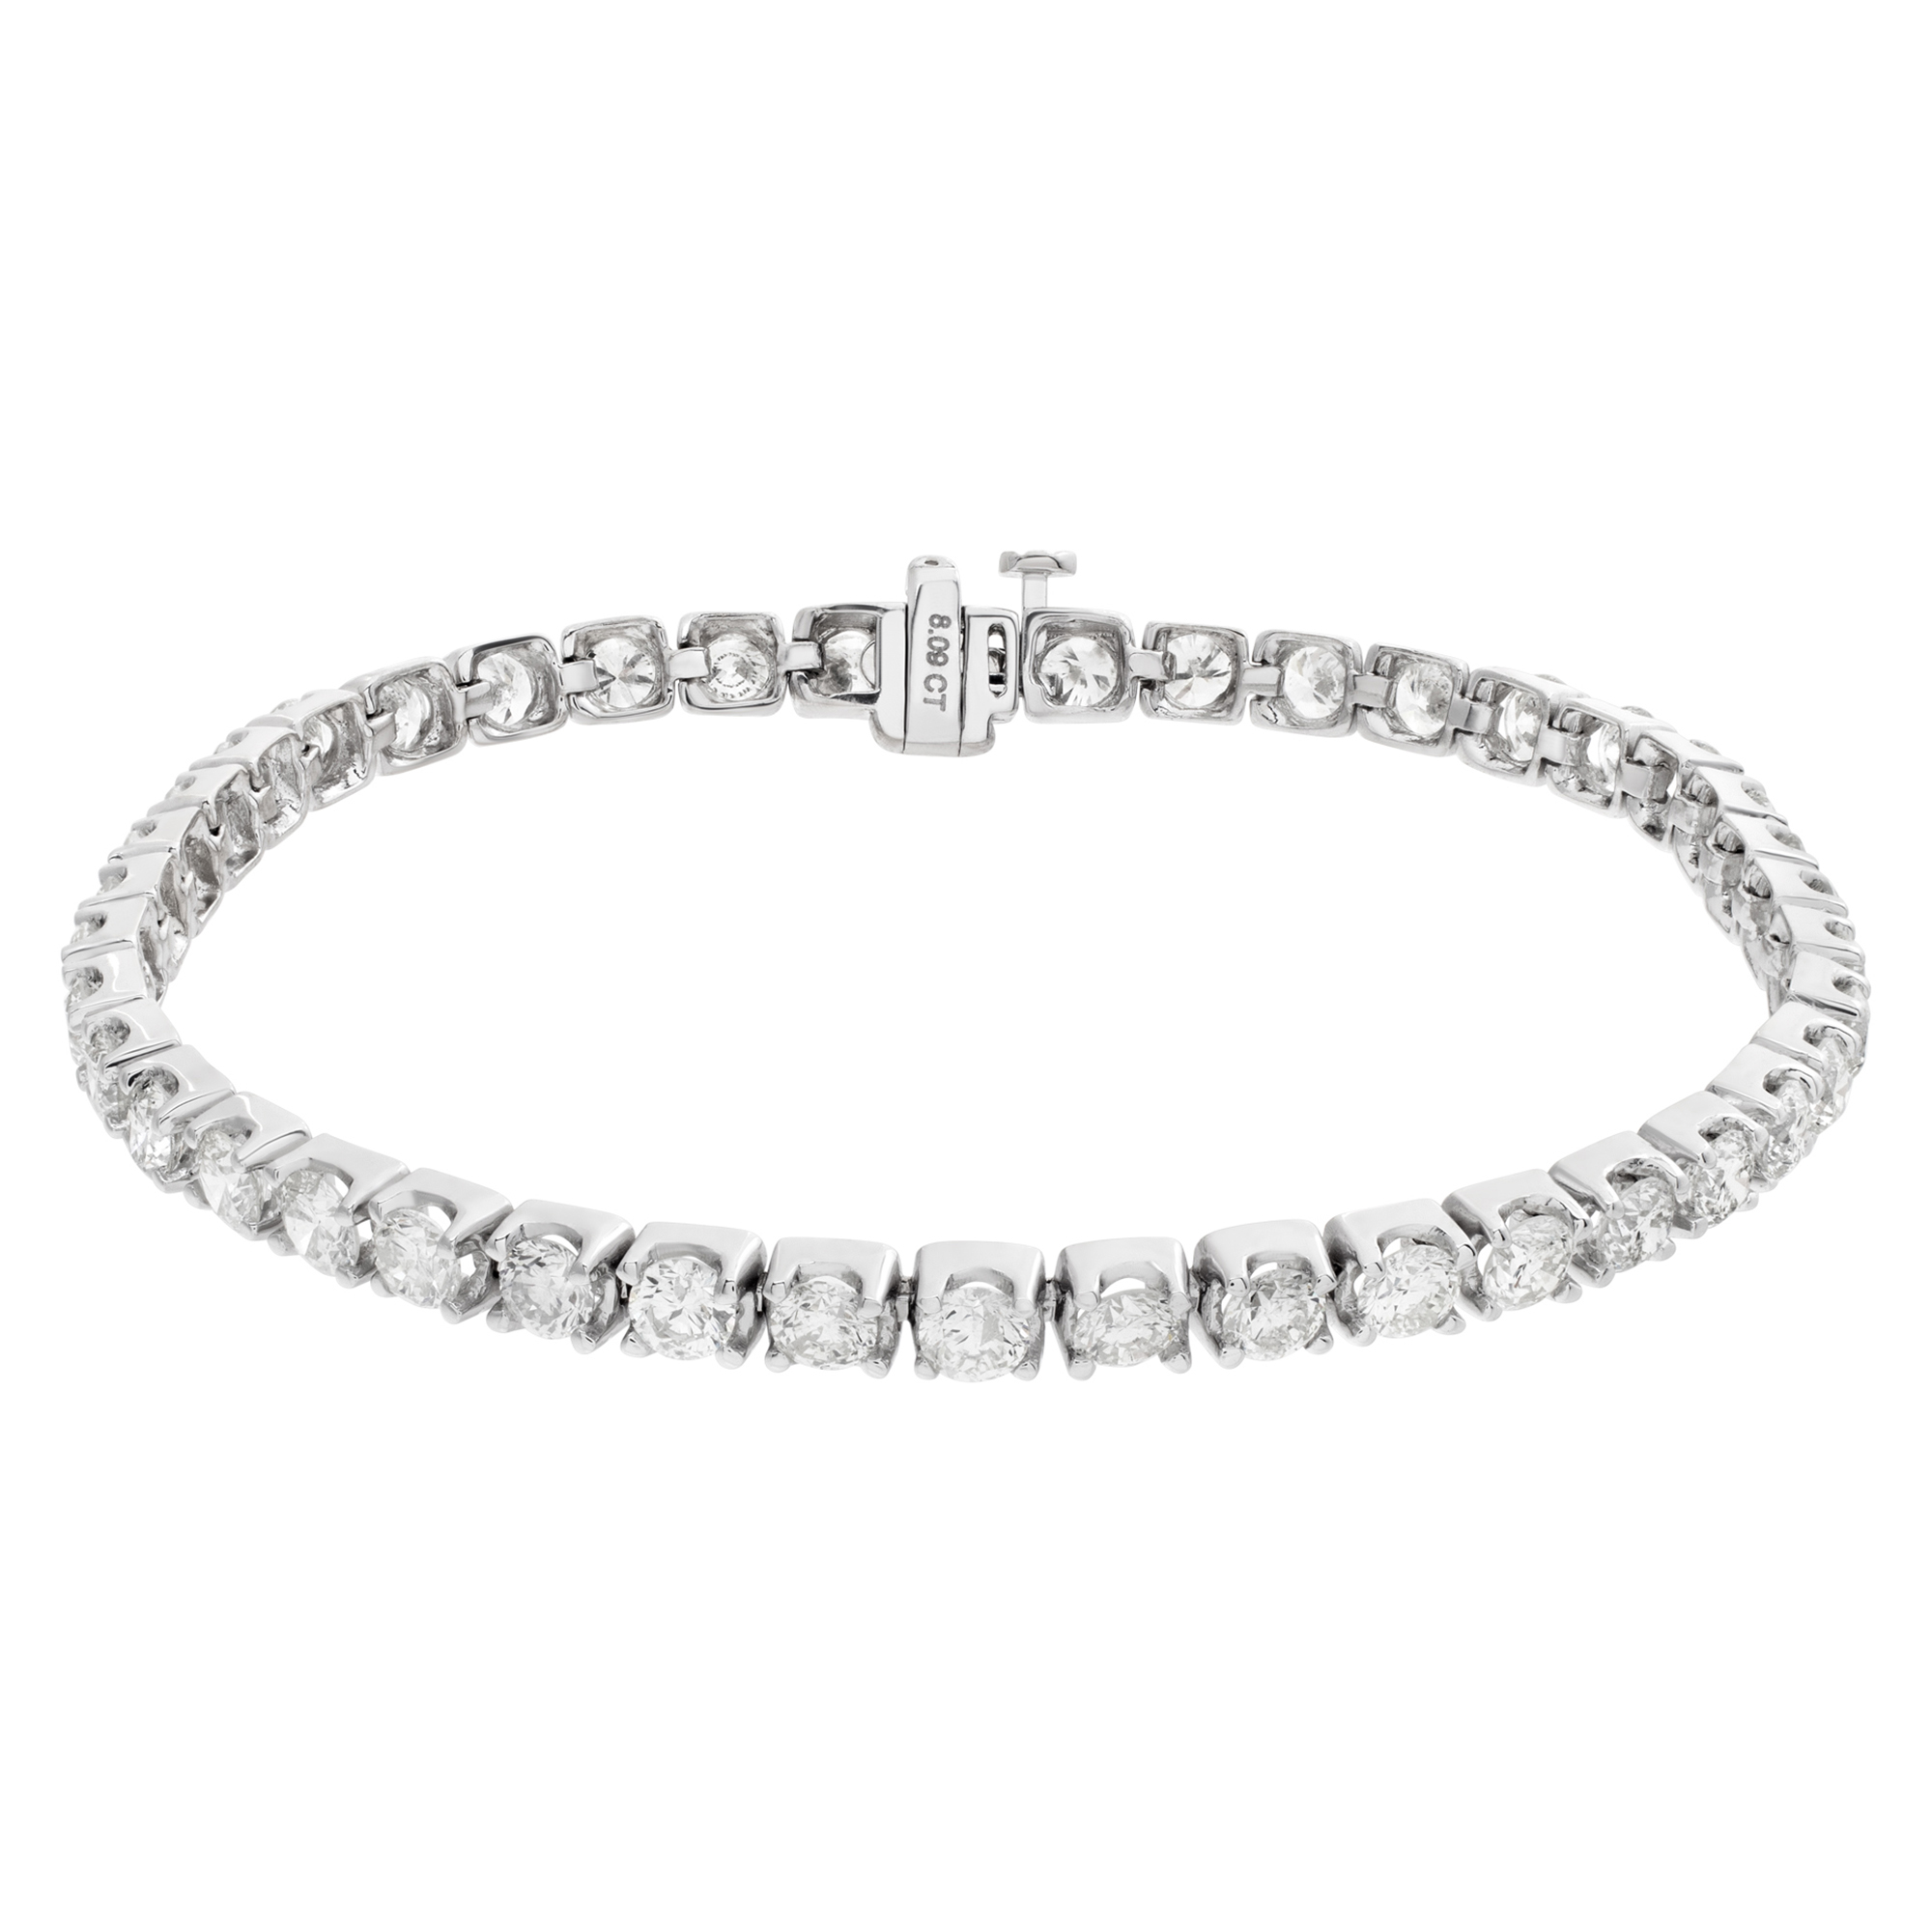 Sparkling line diamond bracelet with 8.09 carat full cut round diamonds set in 14K white gold image 1